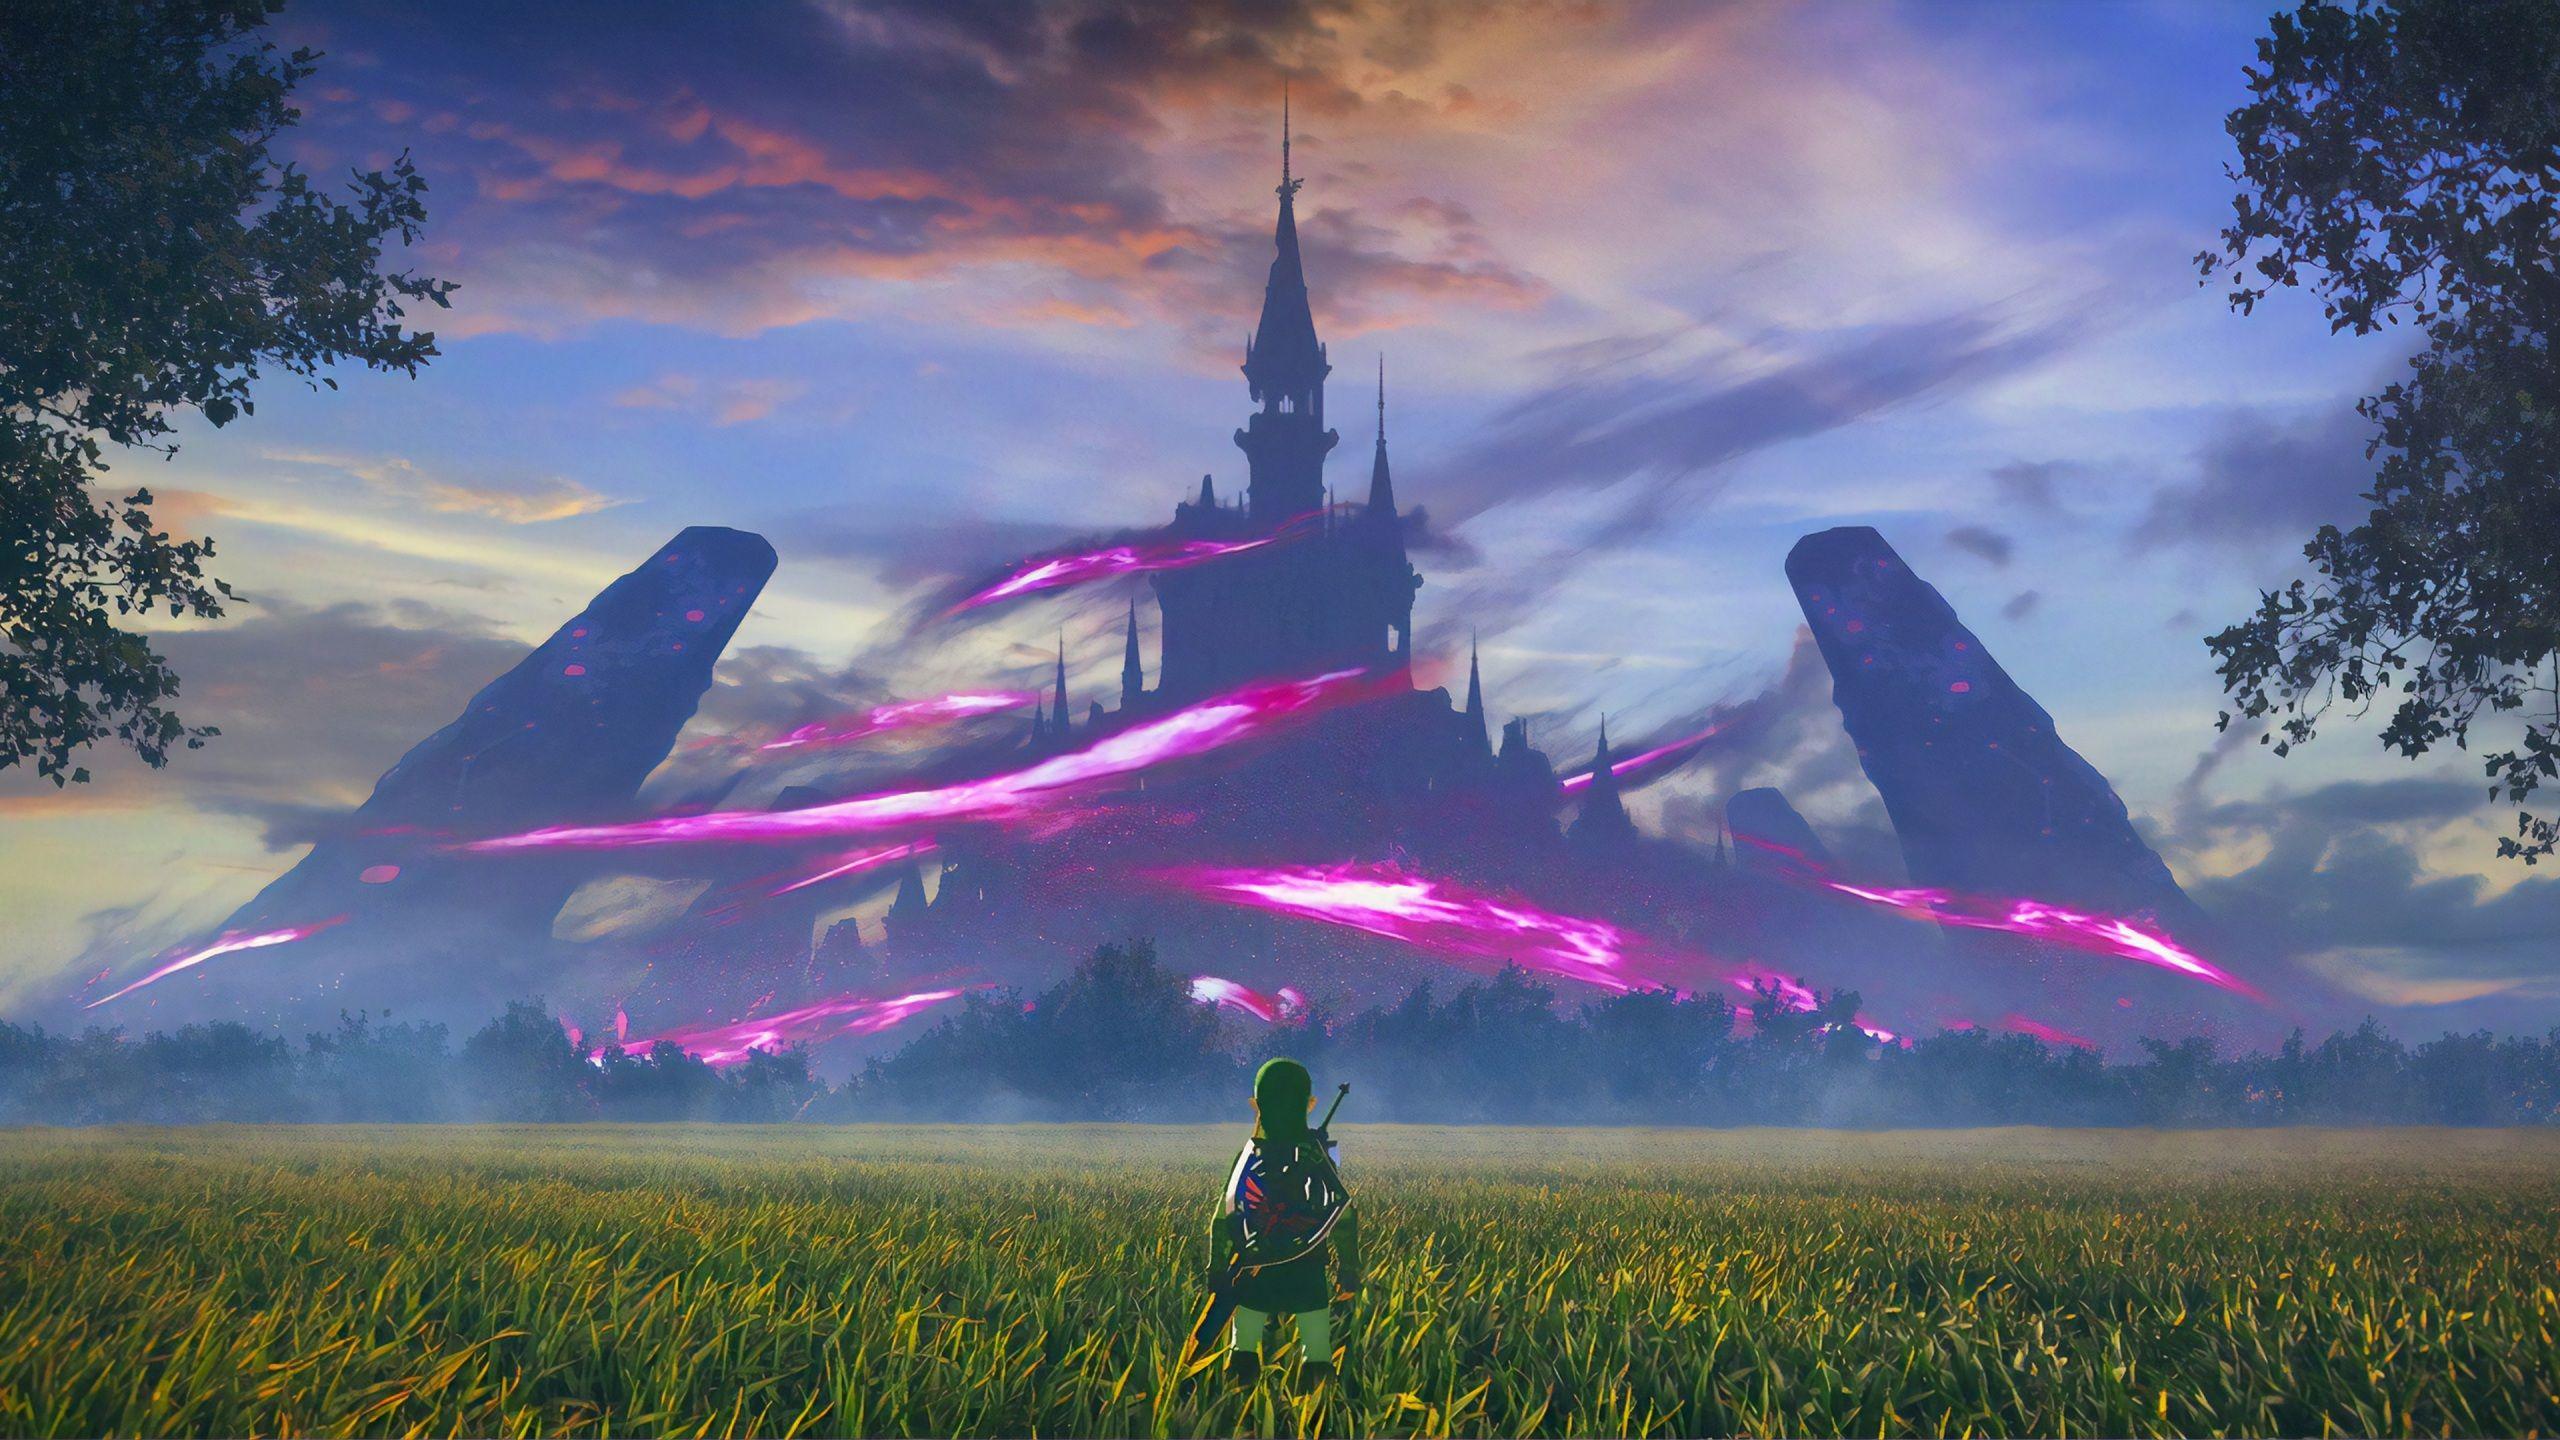 2560x1440 Hình nền trò chơi 4k Zelda 2019, Hình nền 4k, Hình nền, Hình nền trò chơi, Hình nền hd, The Legend Of Zelda Wallpaper